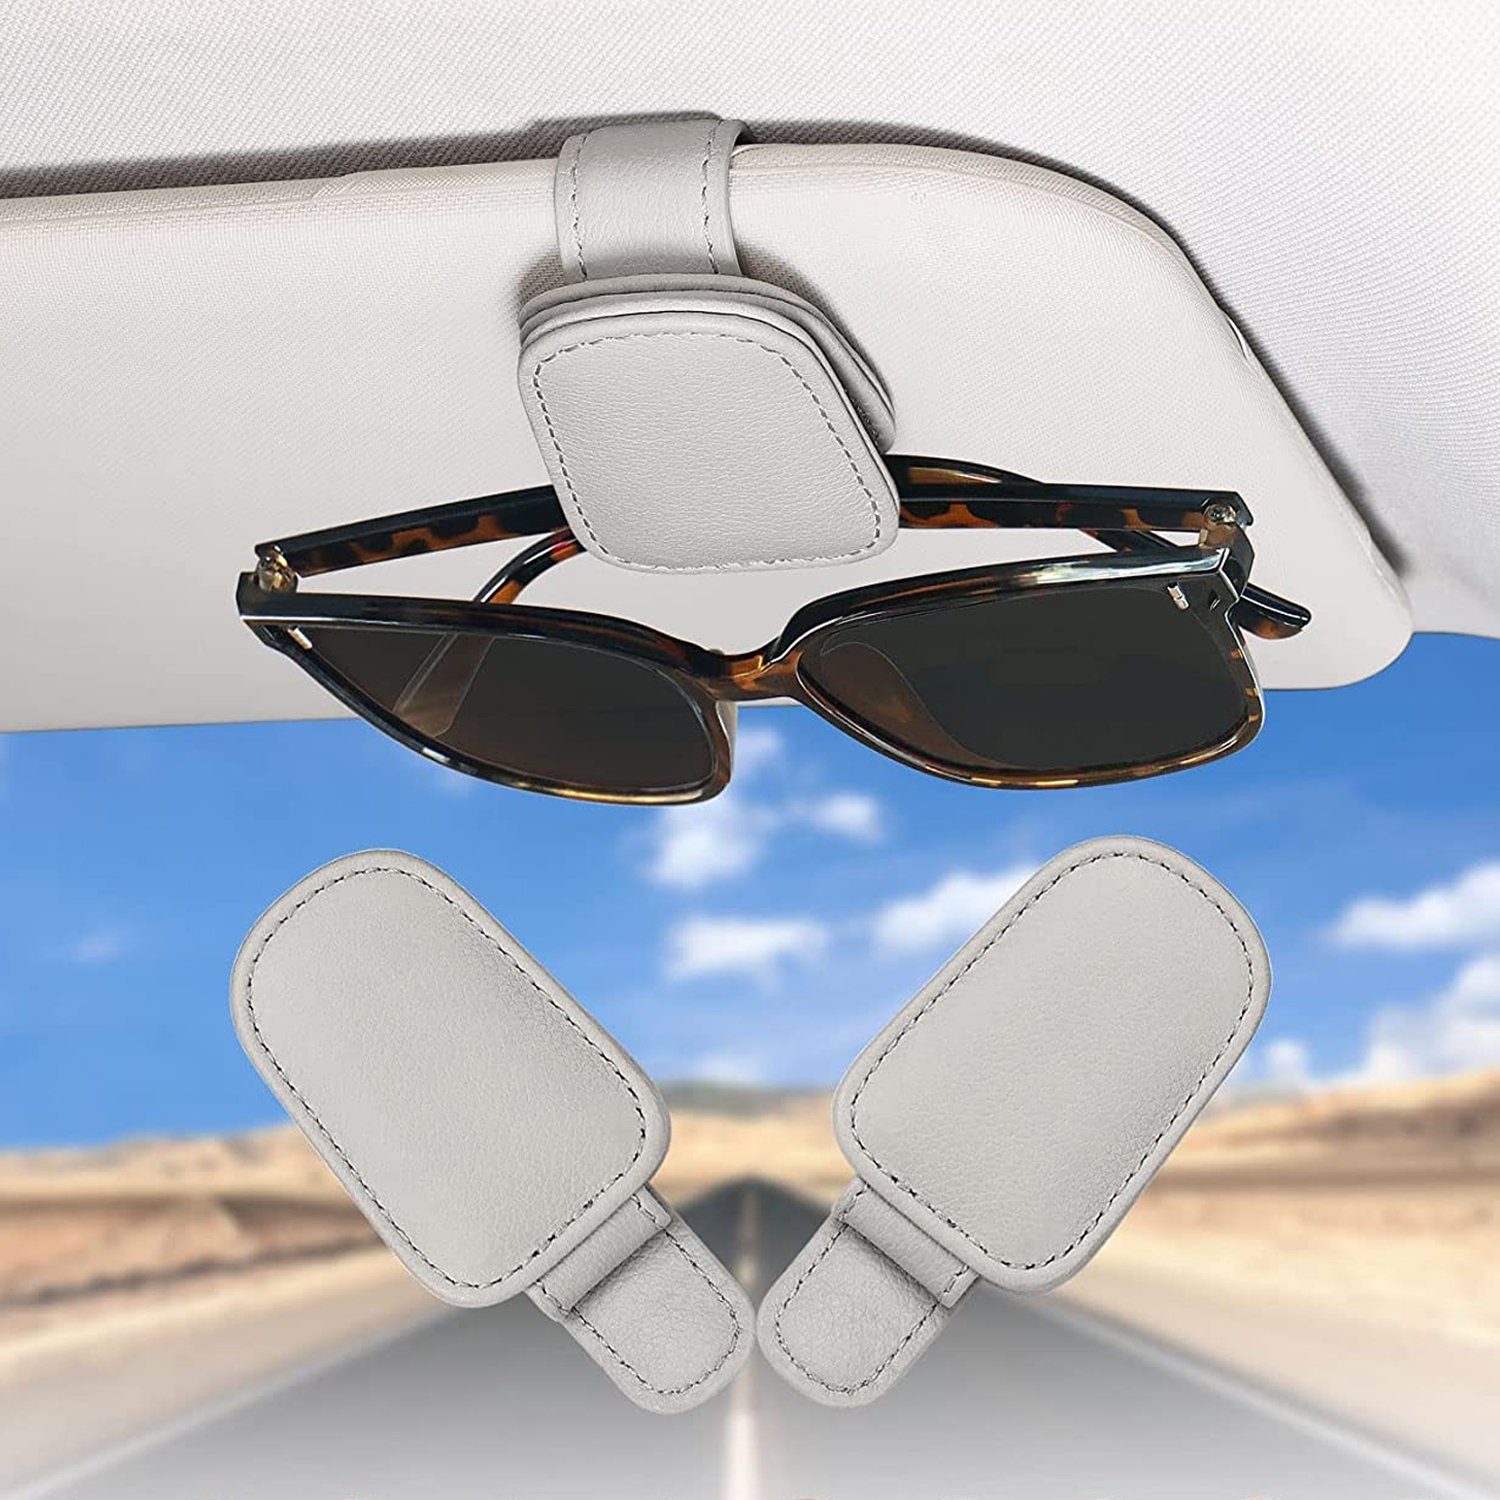 NUODWELL Autosonnenschutz 2 Pack Brillenhalter Auto Sonnenblende